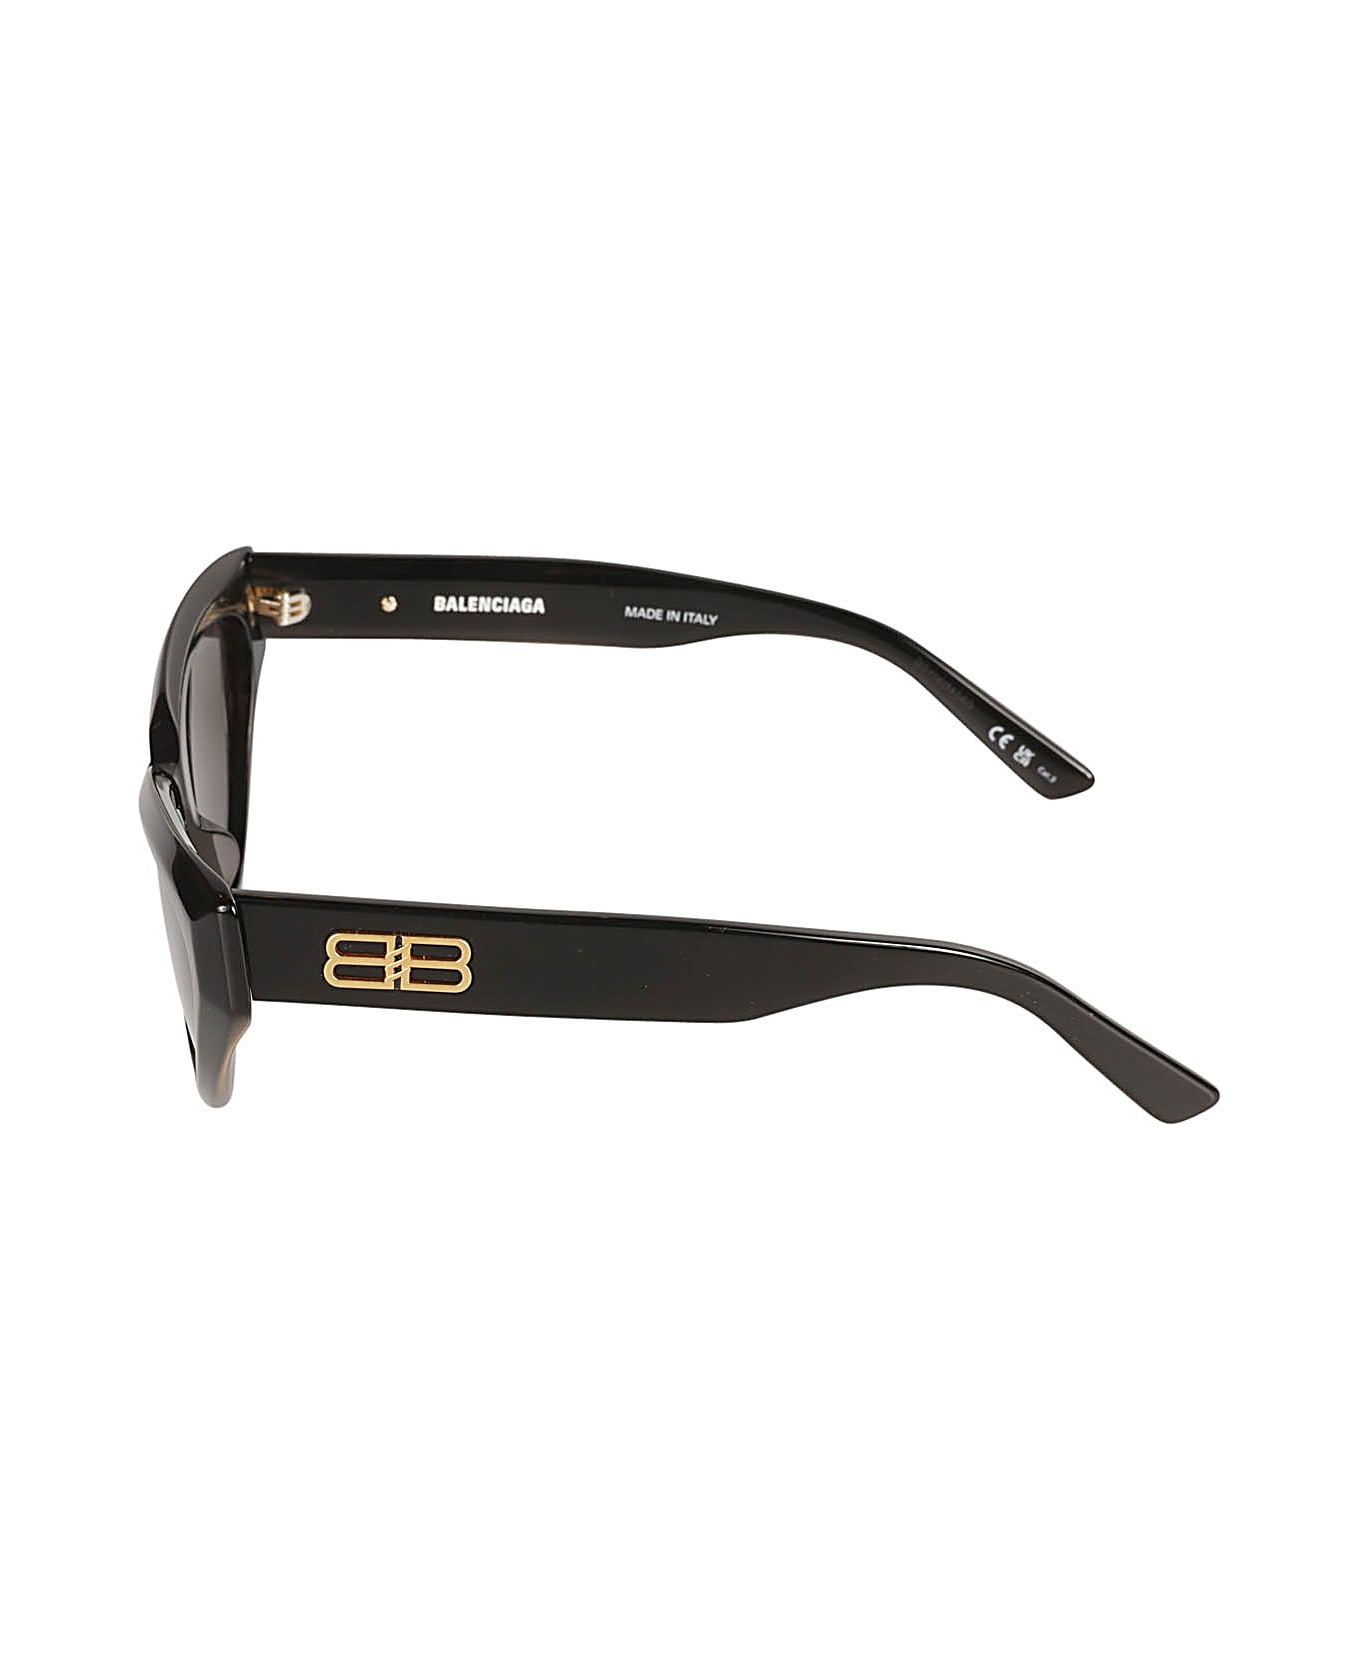 Balenciaga Eyewear Bb Plaque Cat Eye Frame Glasses - Black/Grey アイウェア